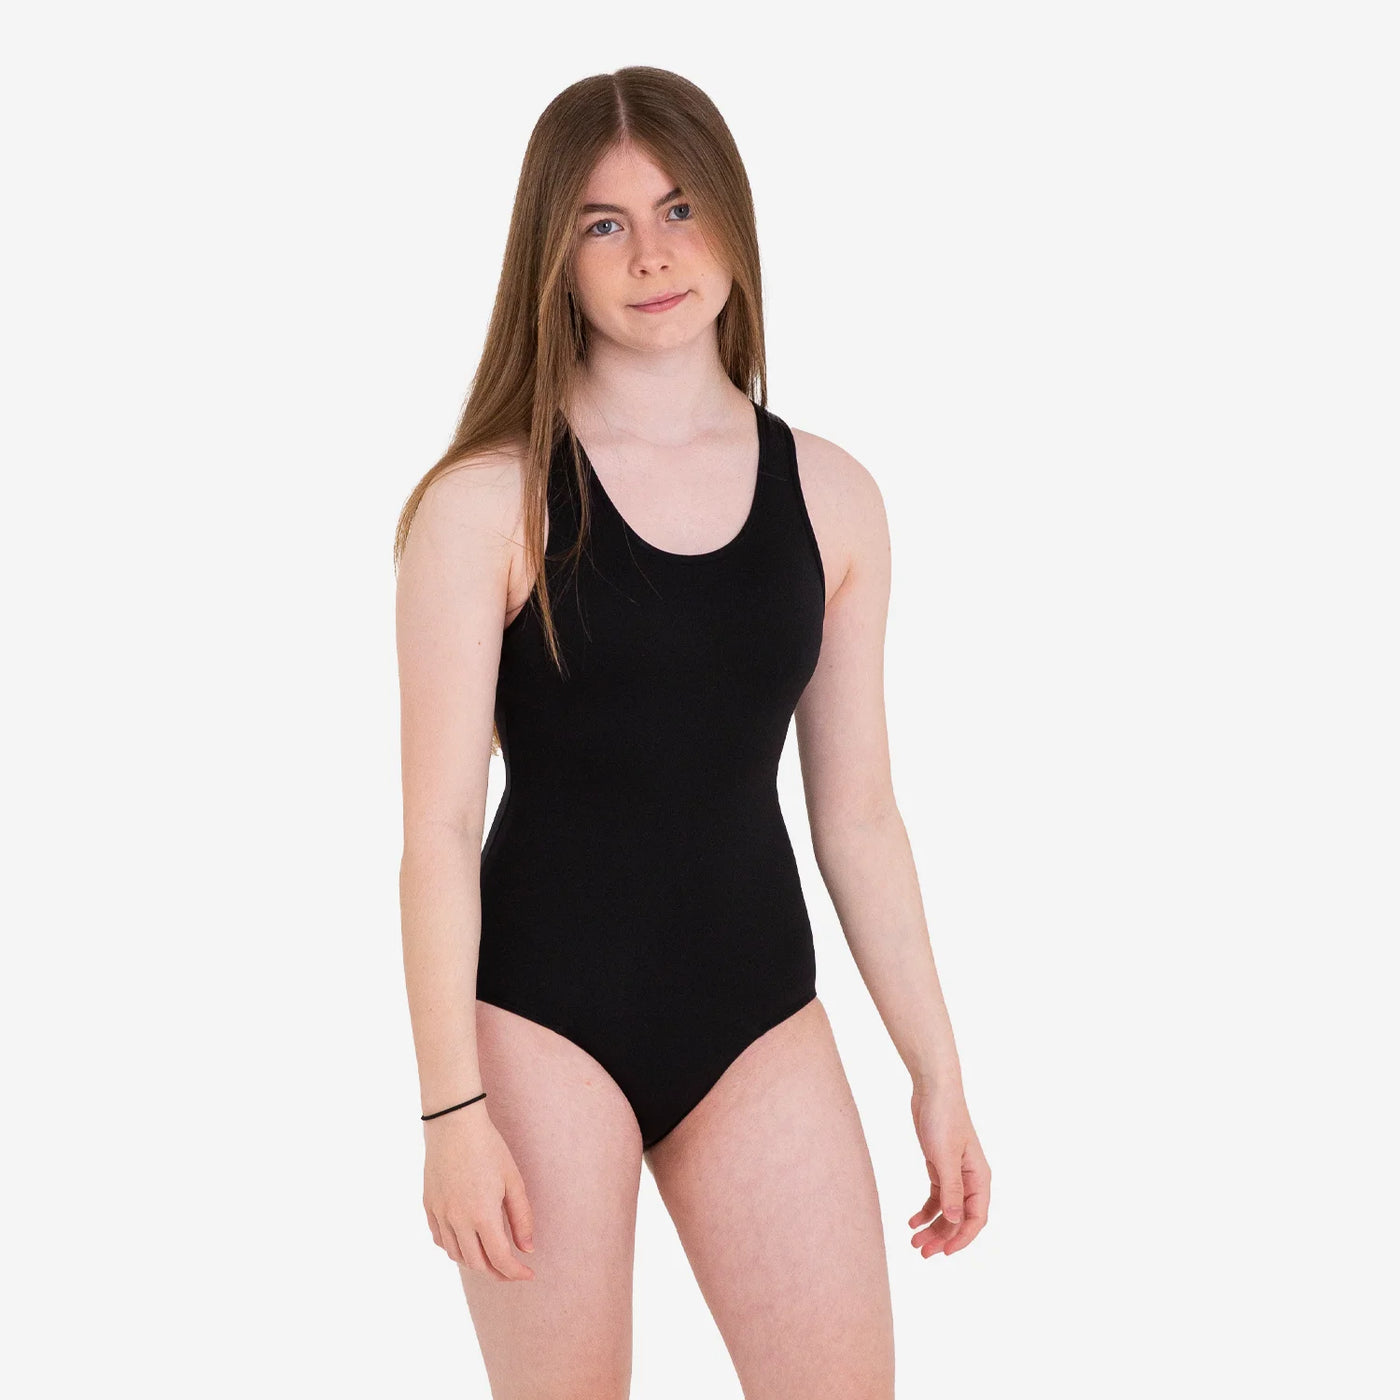 WUKA Teen Period Racerback Swimsuit - Black - front view